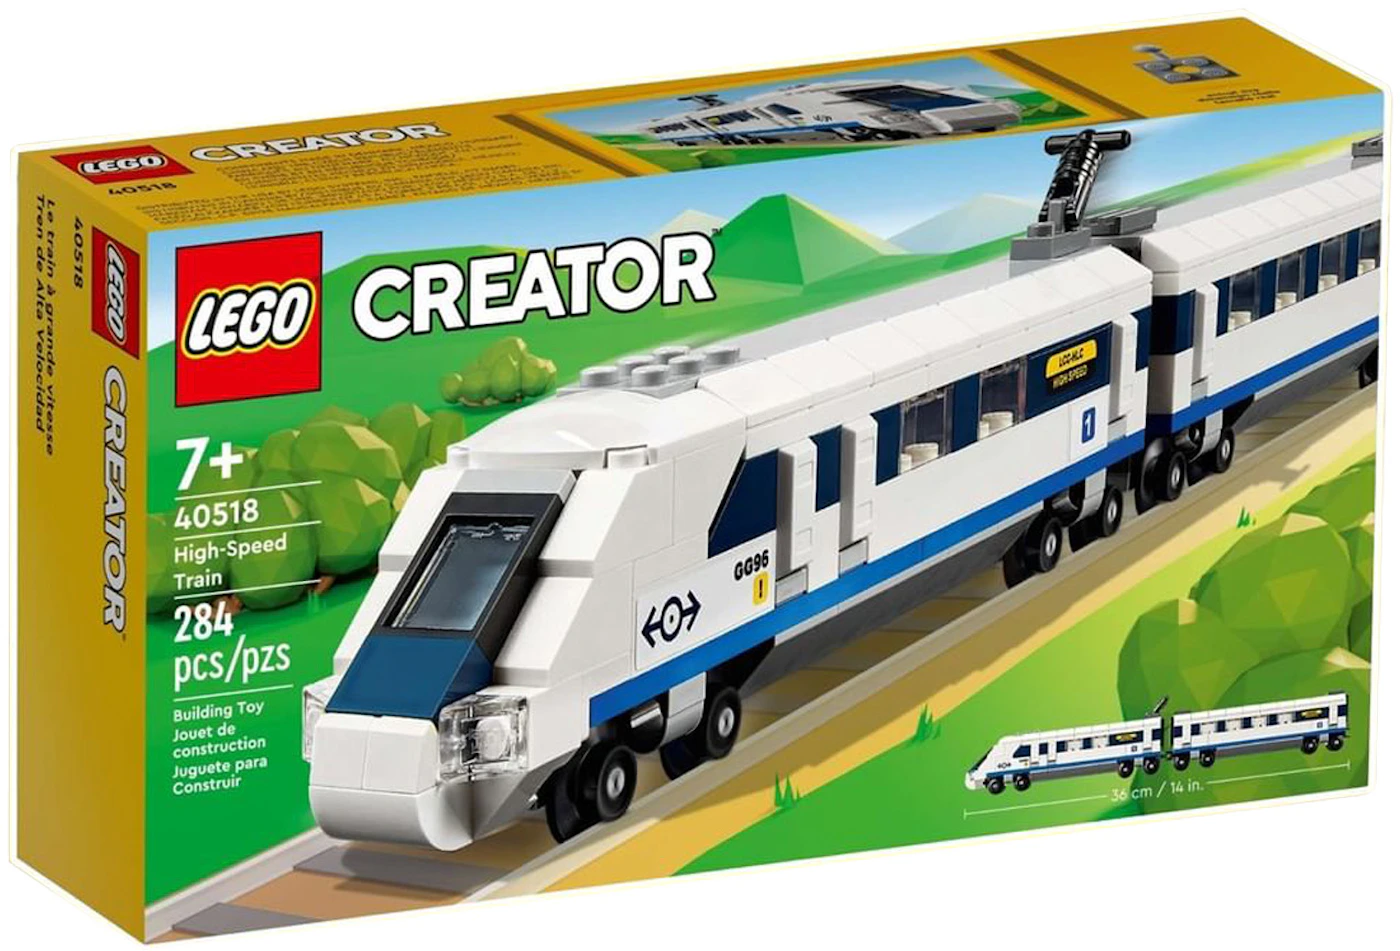 https://images.stockx.com/images/LEGO-Creator-High-Speed-Train-Set-40518.jpg?fit=fill&bg=FFFFFF&w=700&h=500&fm=webp&auto=compress&q=90&dpr=2&trim=color&updated_at=1641933129